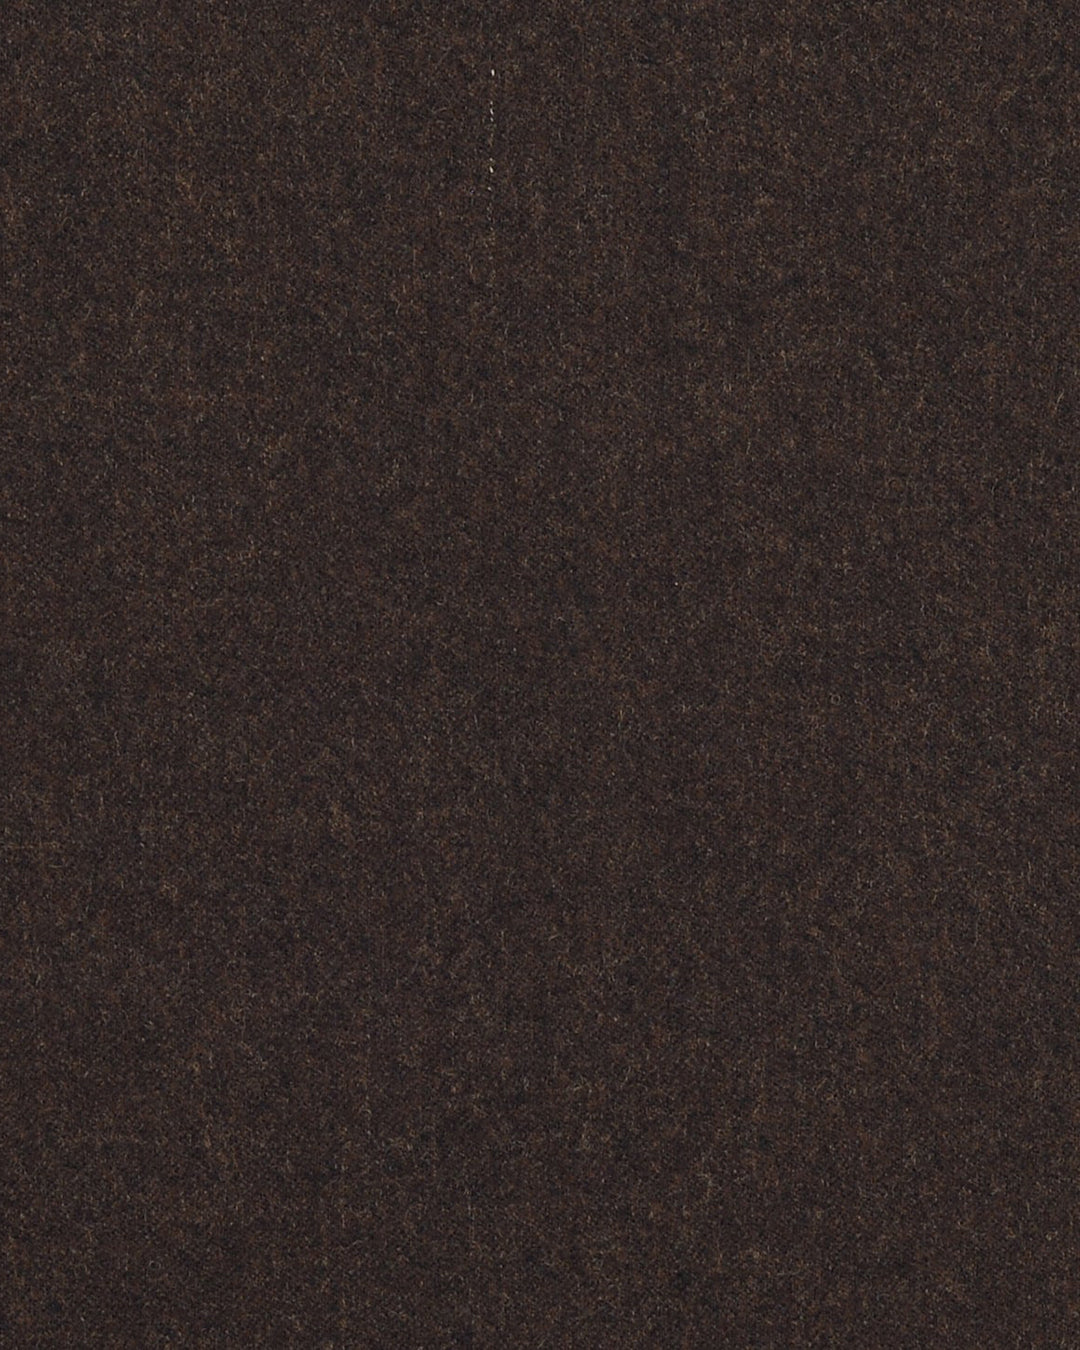 VBC 100% Wool: Dark Chocolate Brown Flannel Dress Pant